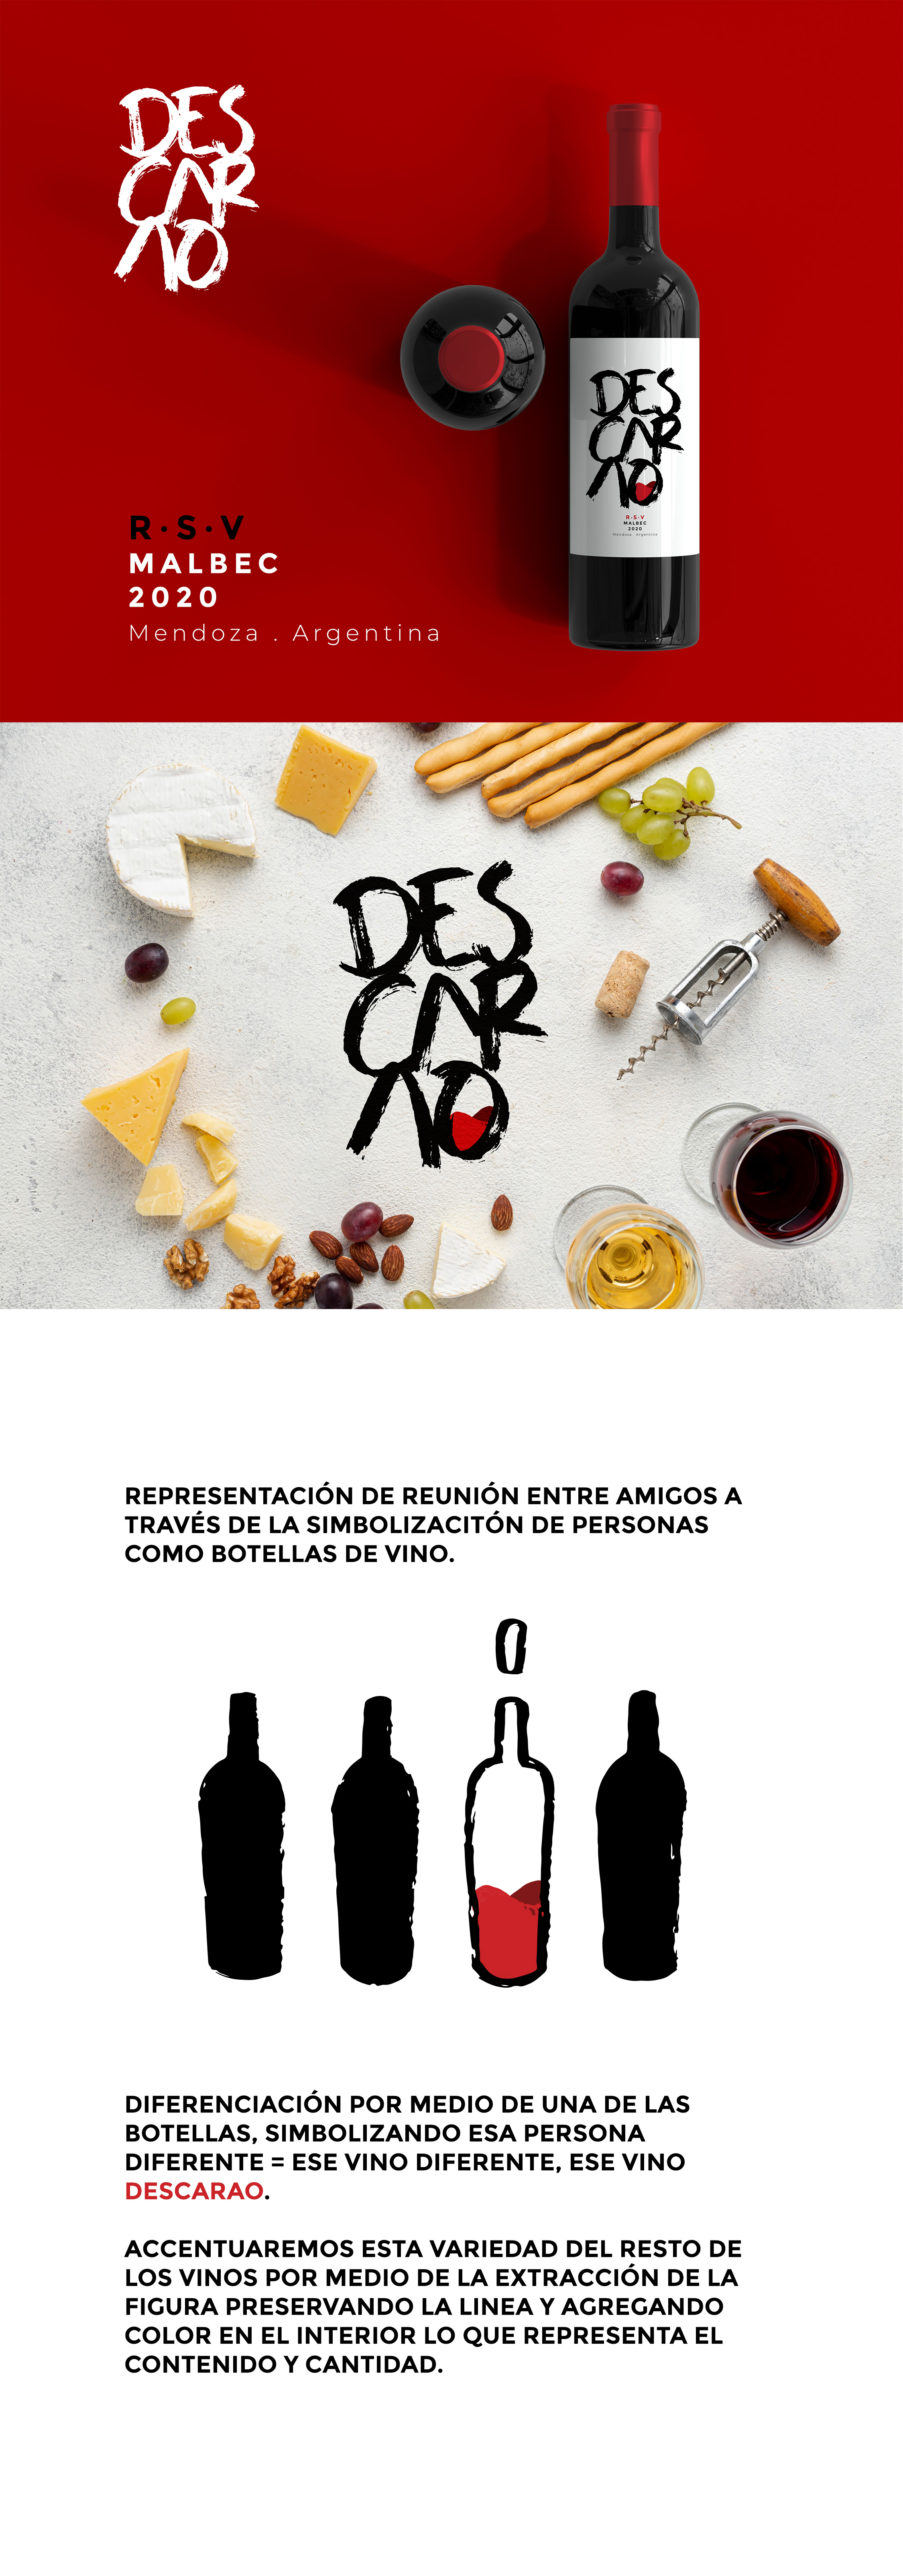 Emiliano_Romero_Design_Branding_DescaraoWines_2021_03